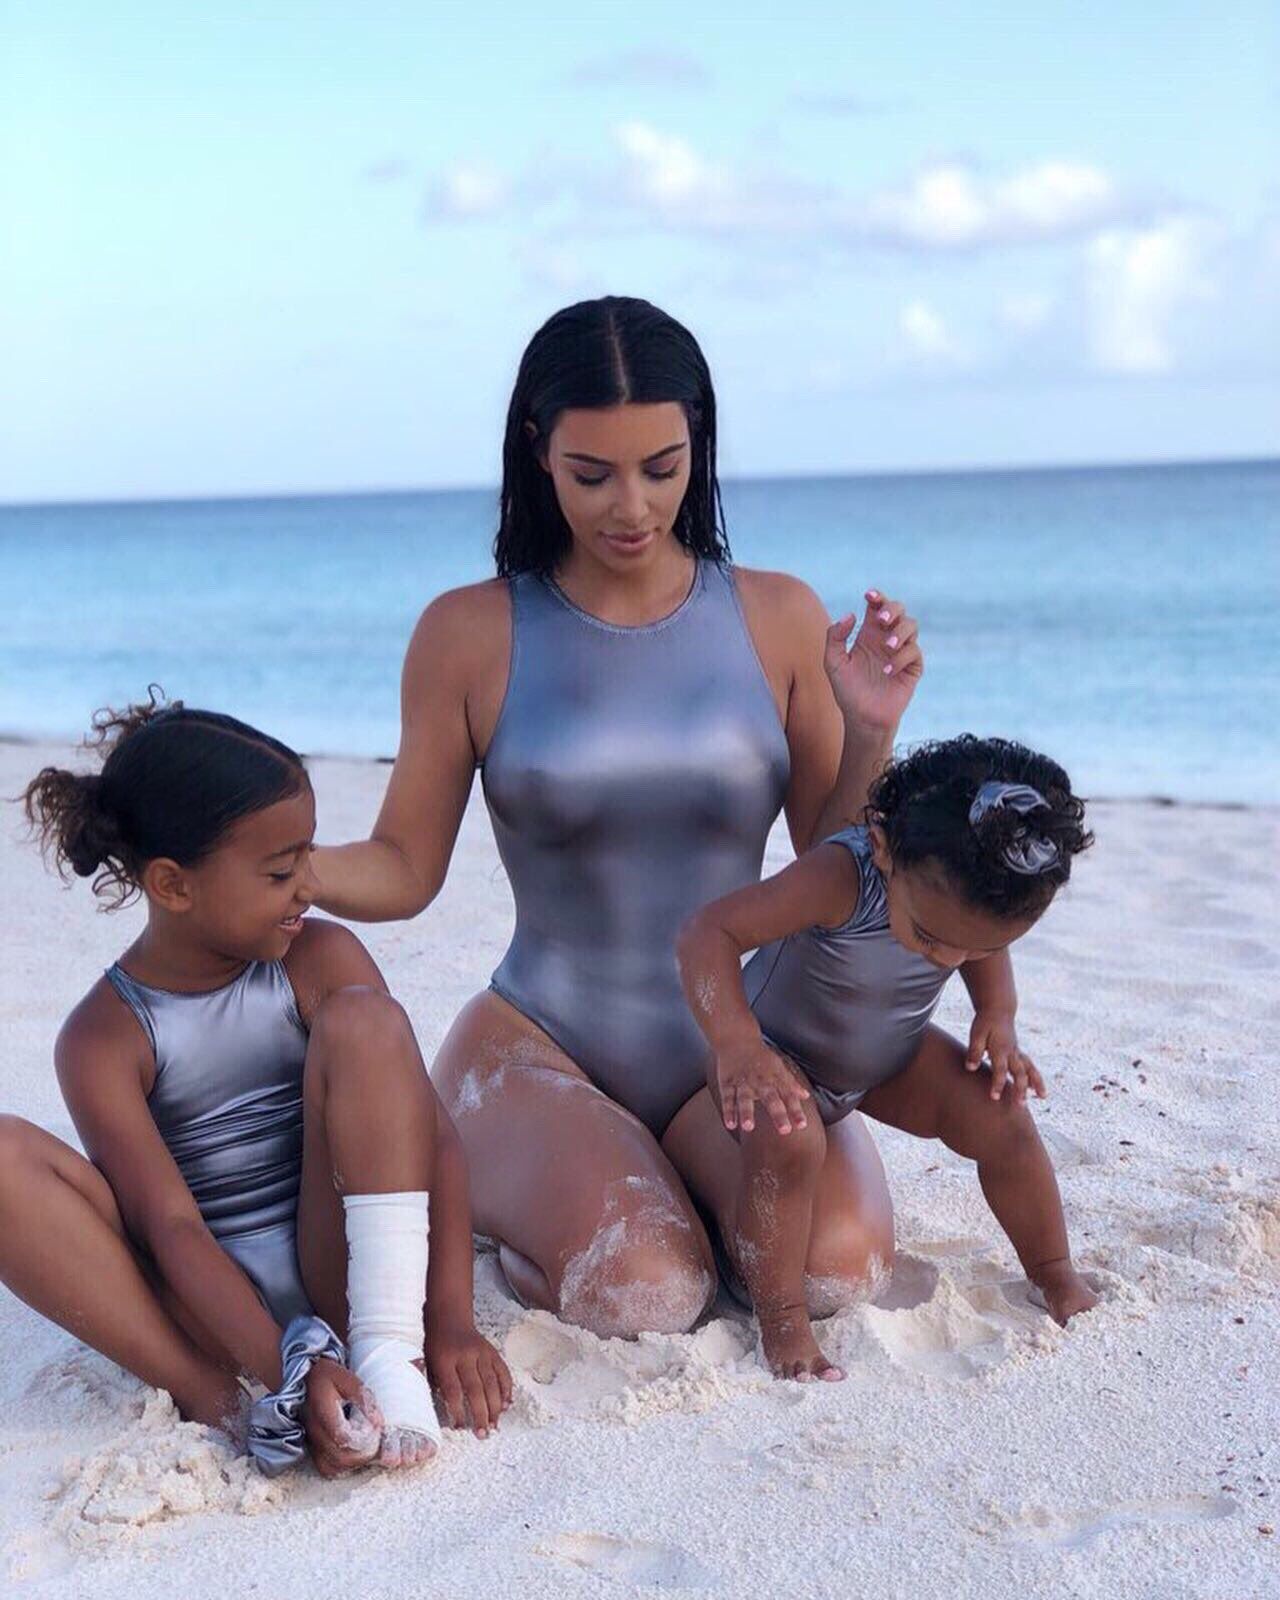 Kim Kardashian Clothing for Kids